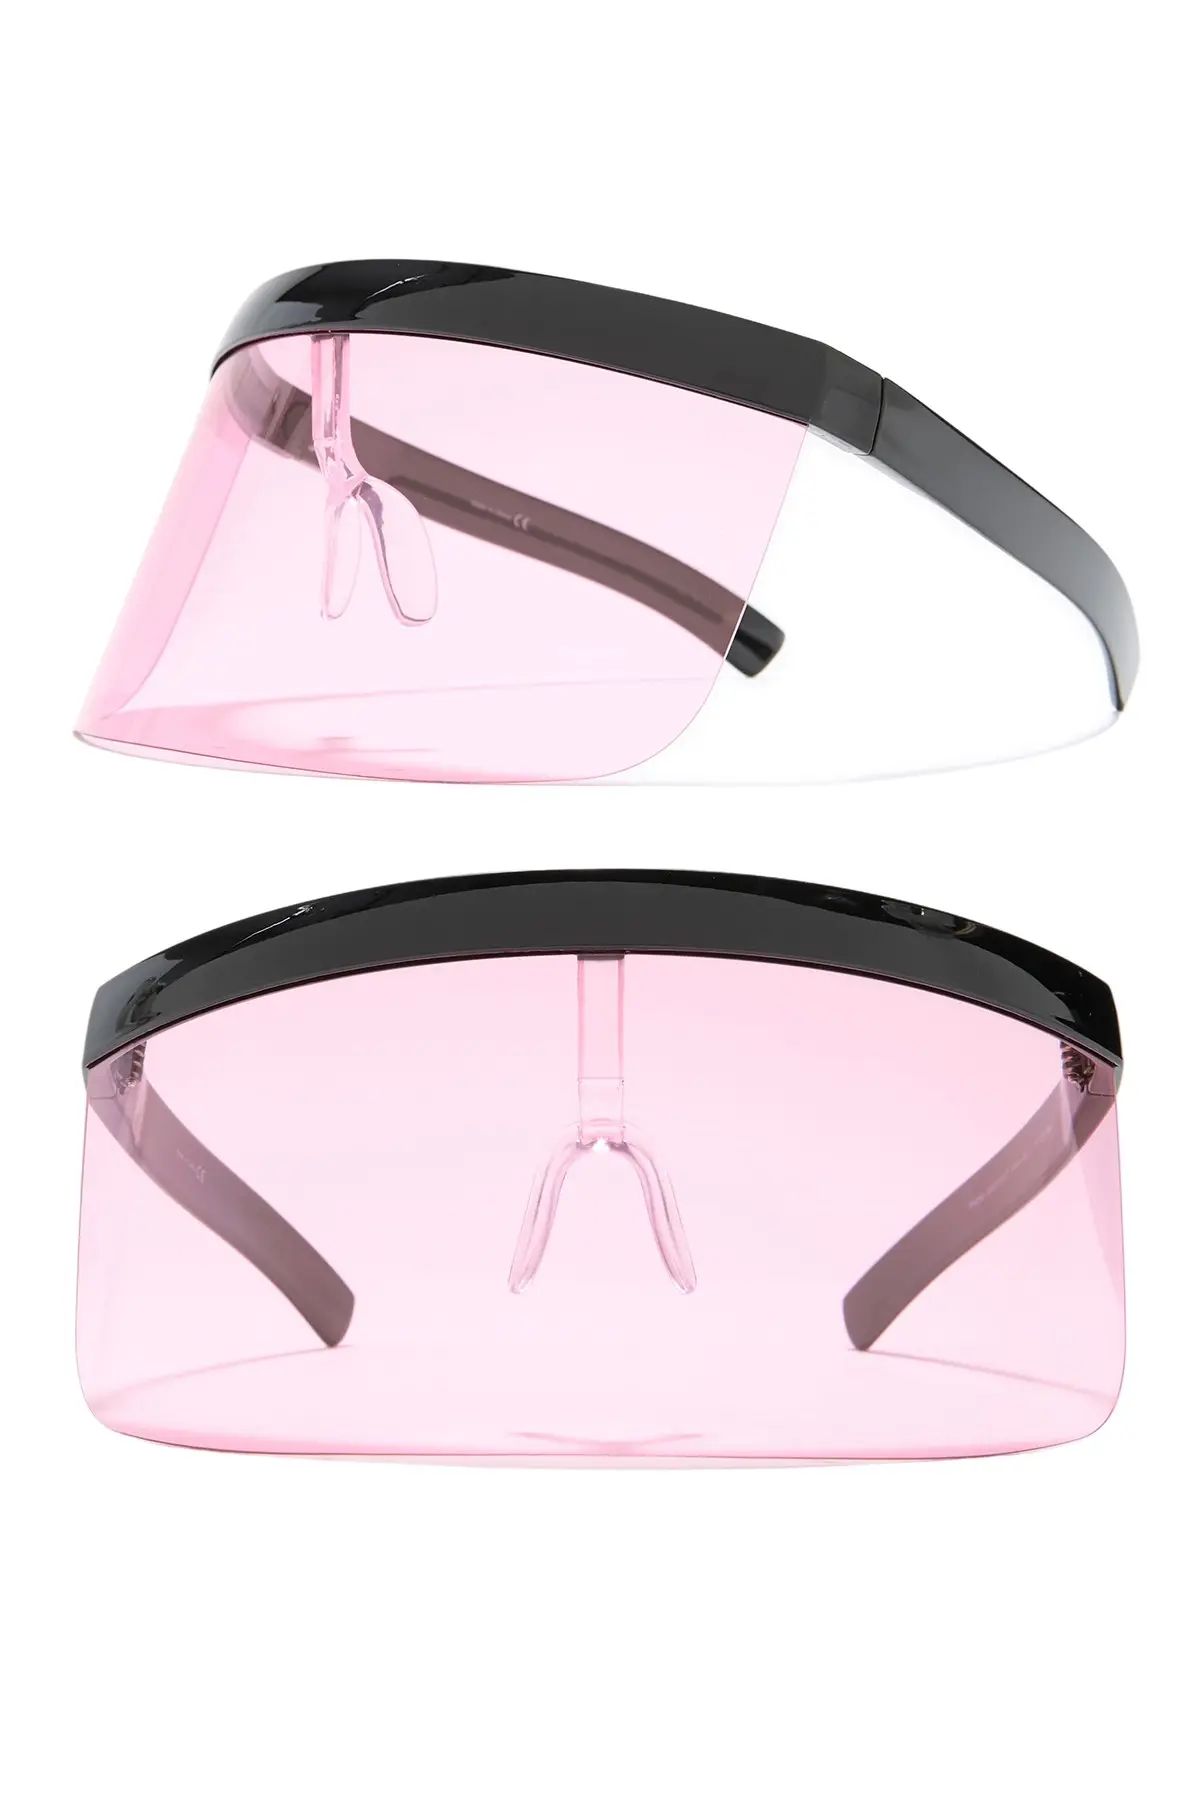 Details Eyewear Personal Protective Eye Shield - Black/Pink at Nordstrom Rack | Nordstrom Rack